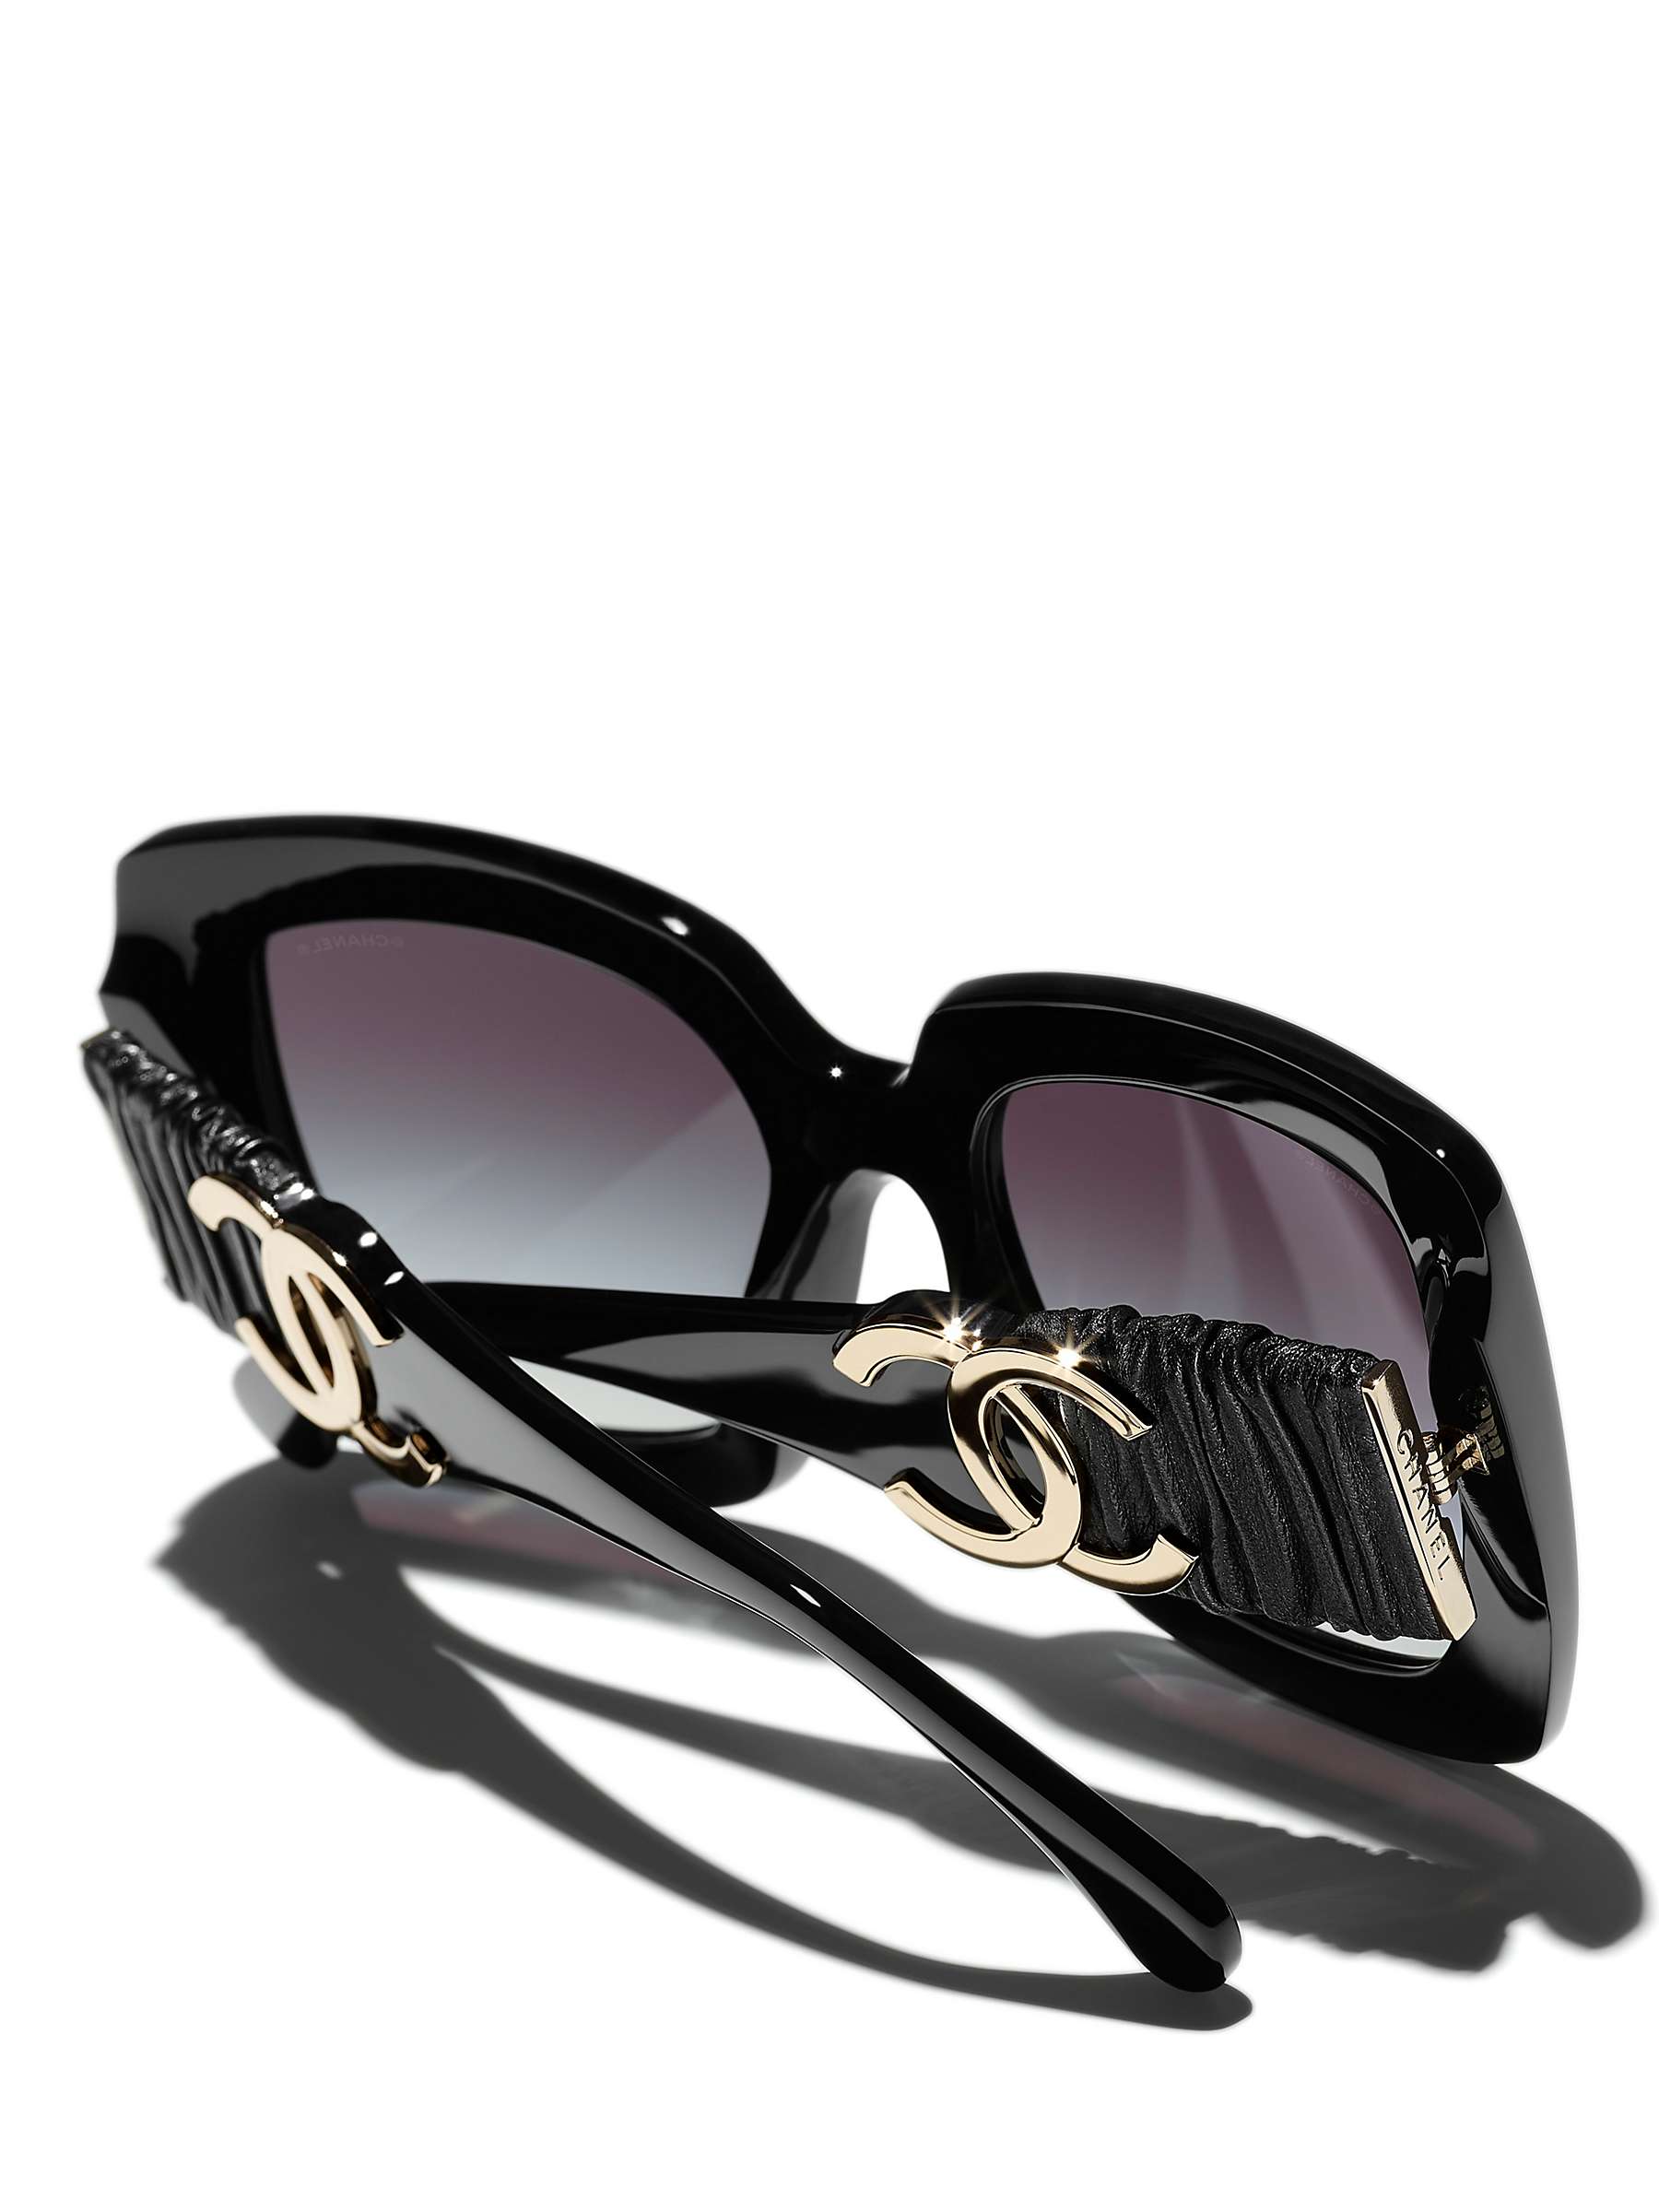 Buy CHANEL Rectangular Sunglasses CH5474Q Black/Blue Gradient Online at johnlewis.com